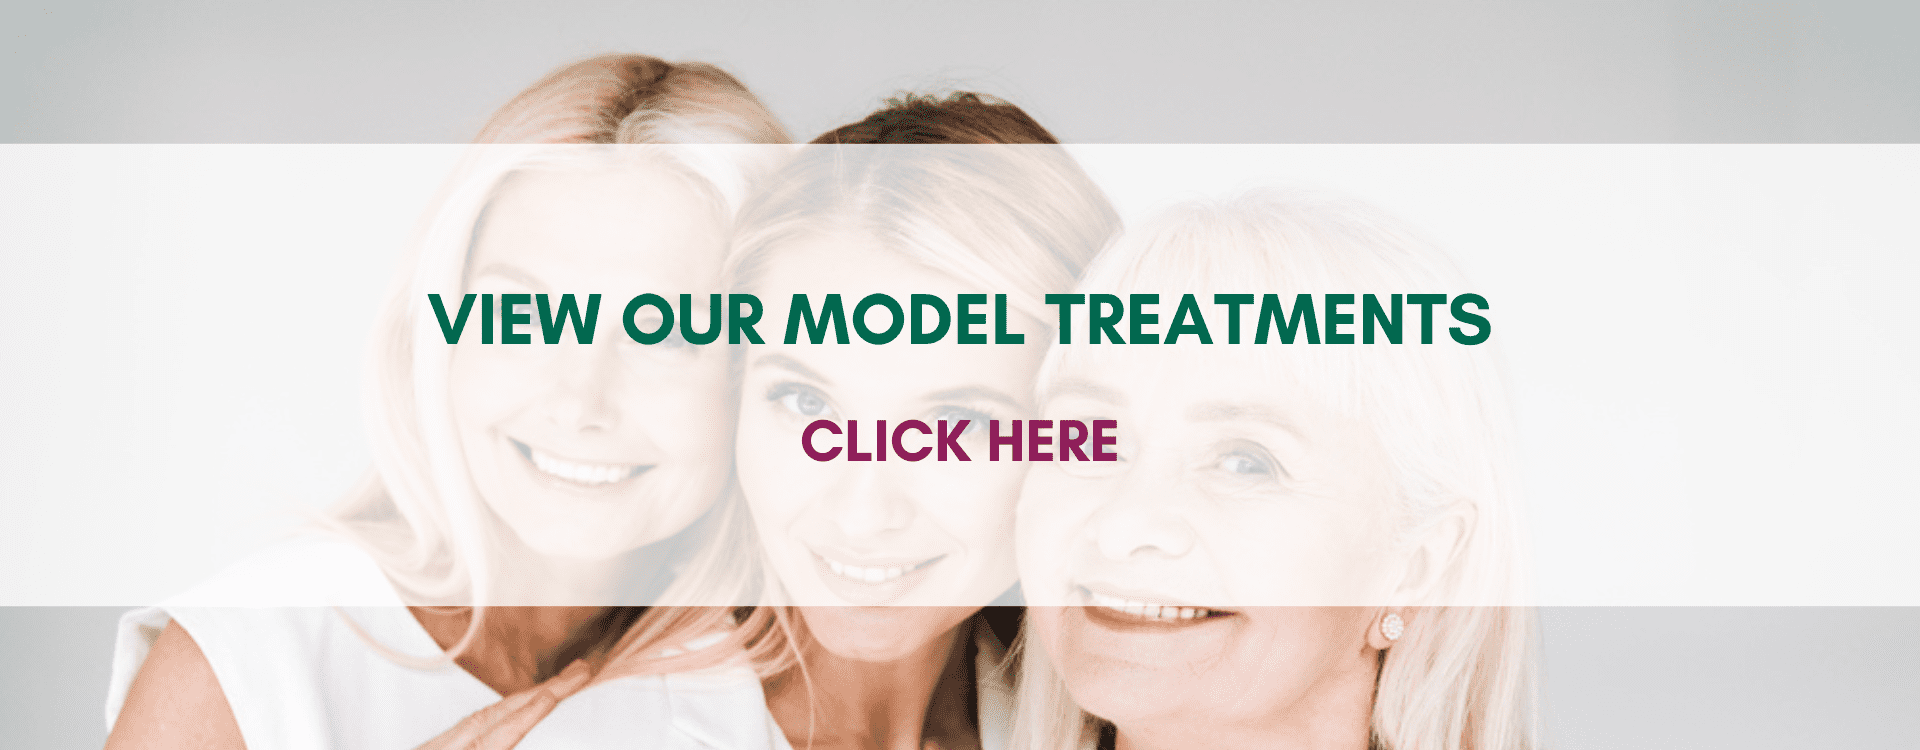 Model Treatments - Mobile